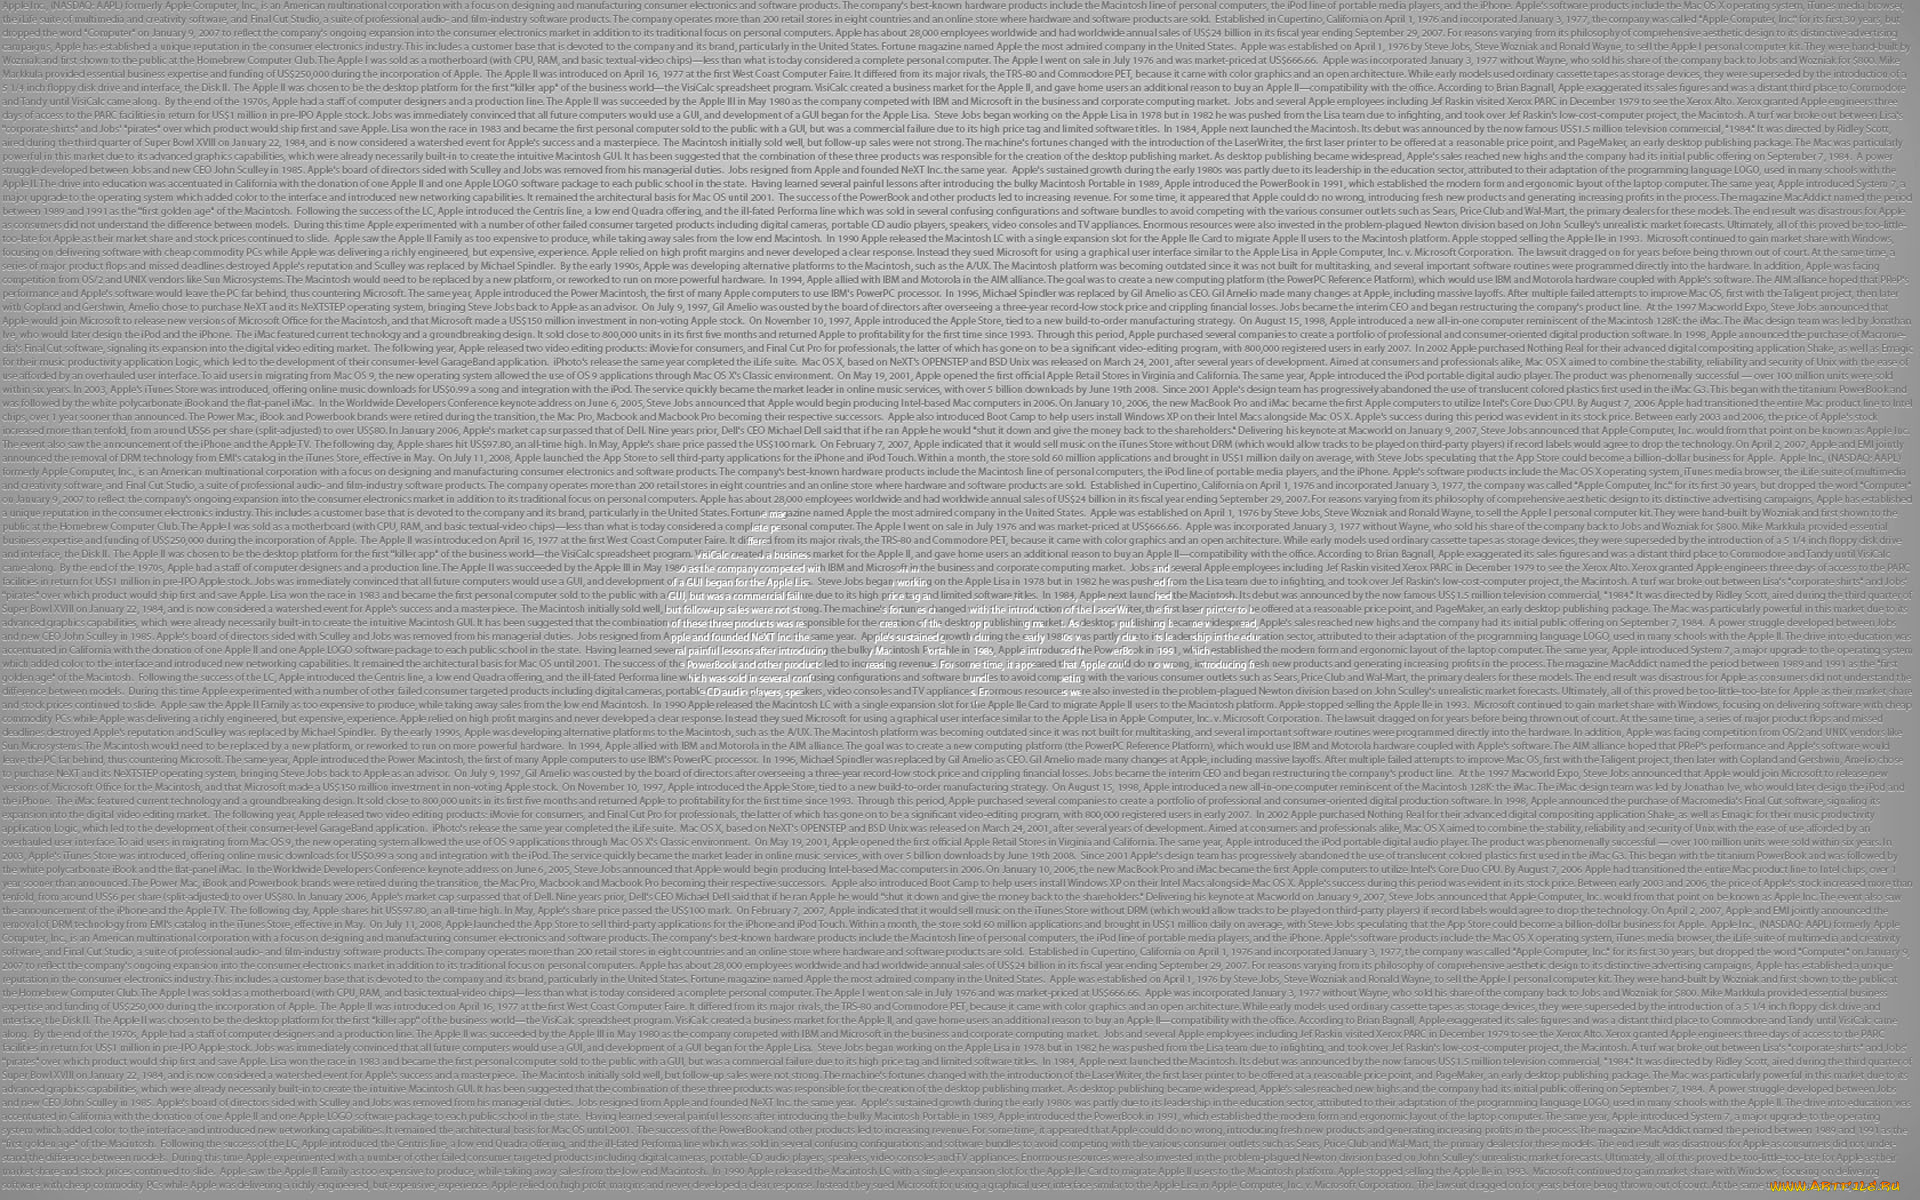 компьютеры, apple, фон, яблоко, аpple, логотип